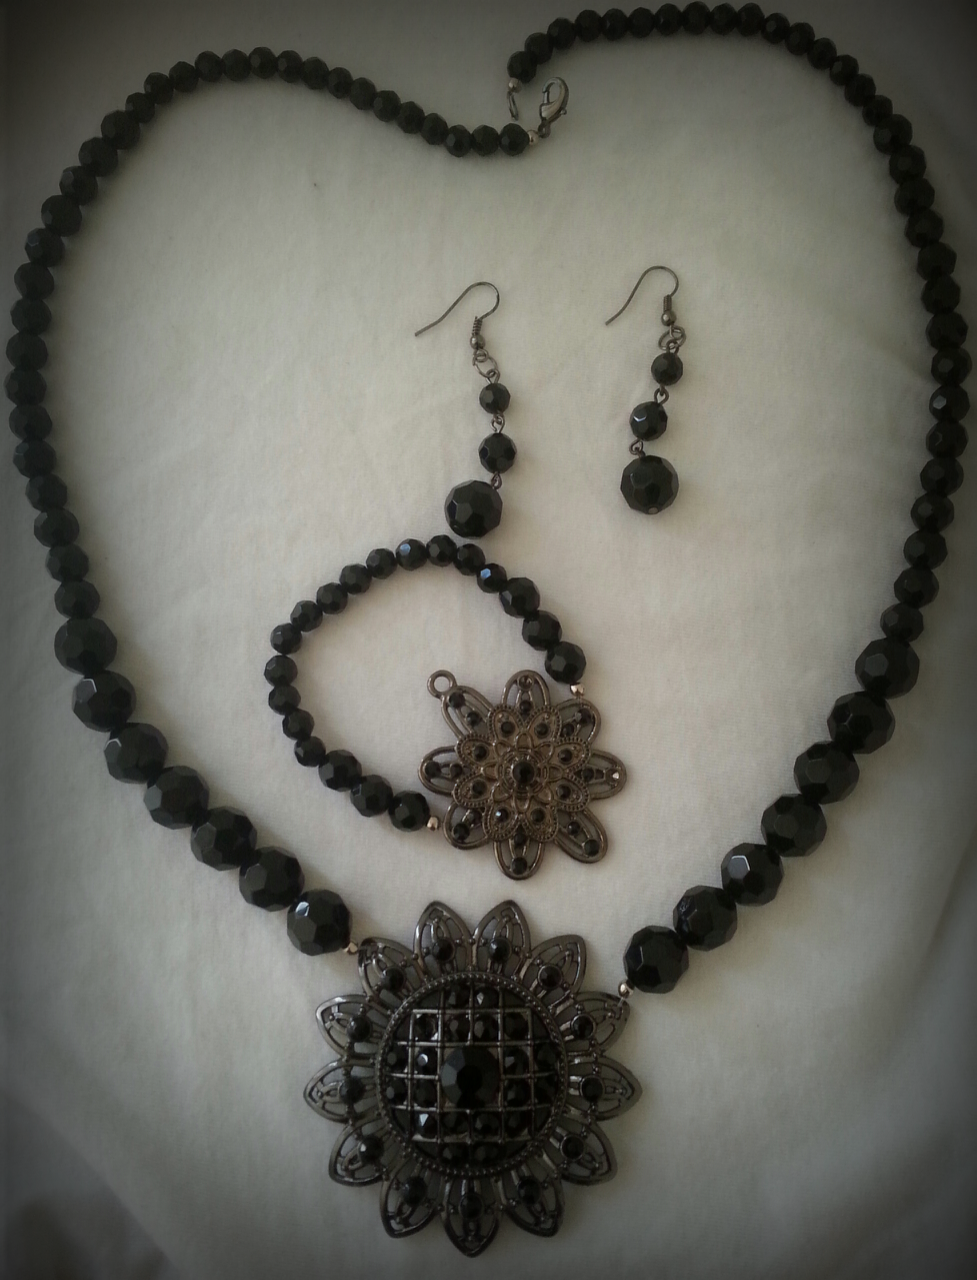 Black necklace set